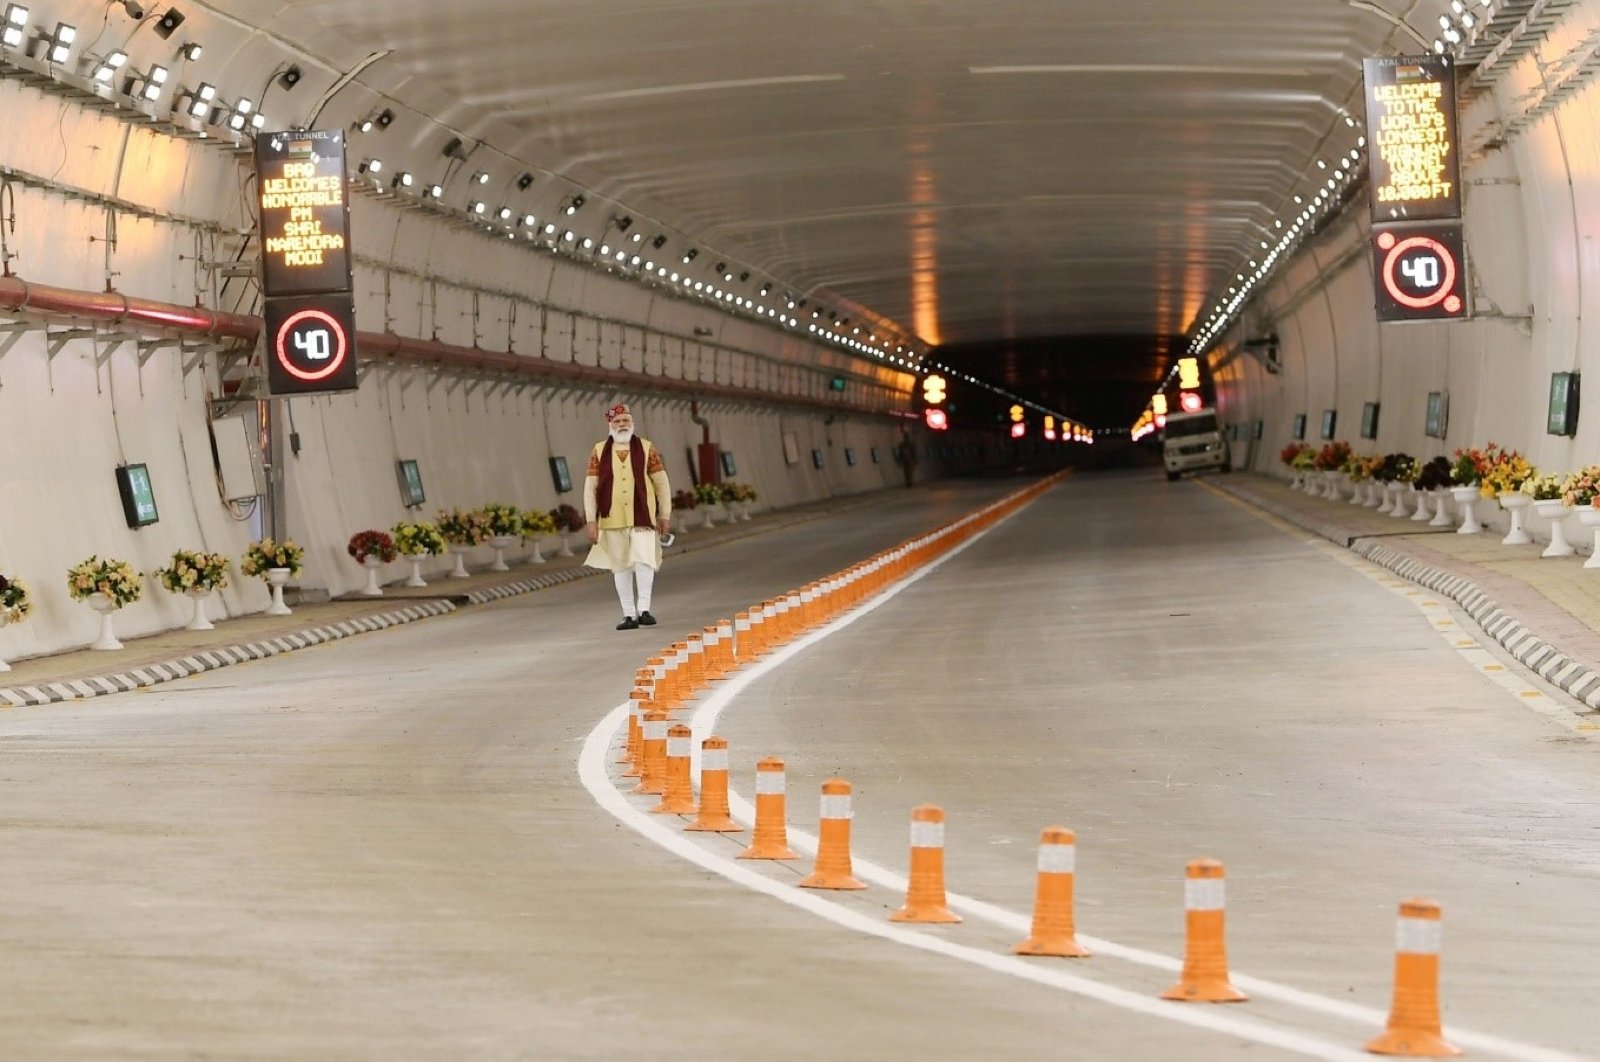 Turkish tech firm behind world’s longest highway tunnel, which will